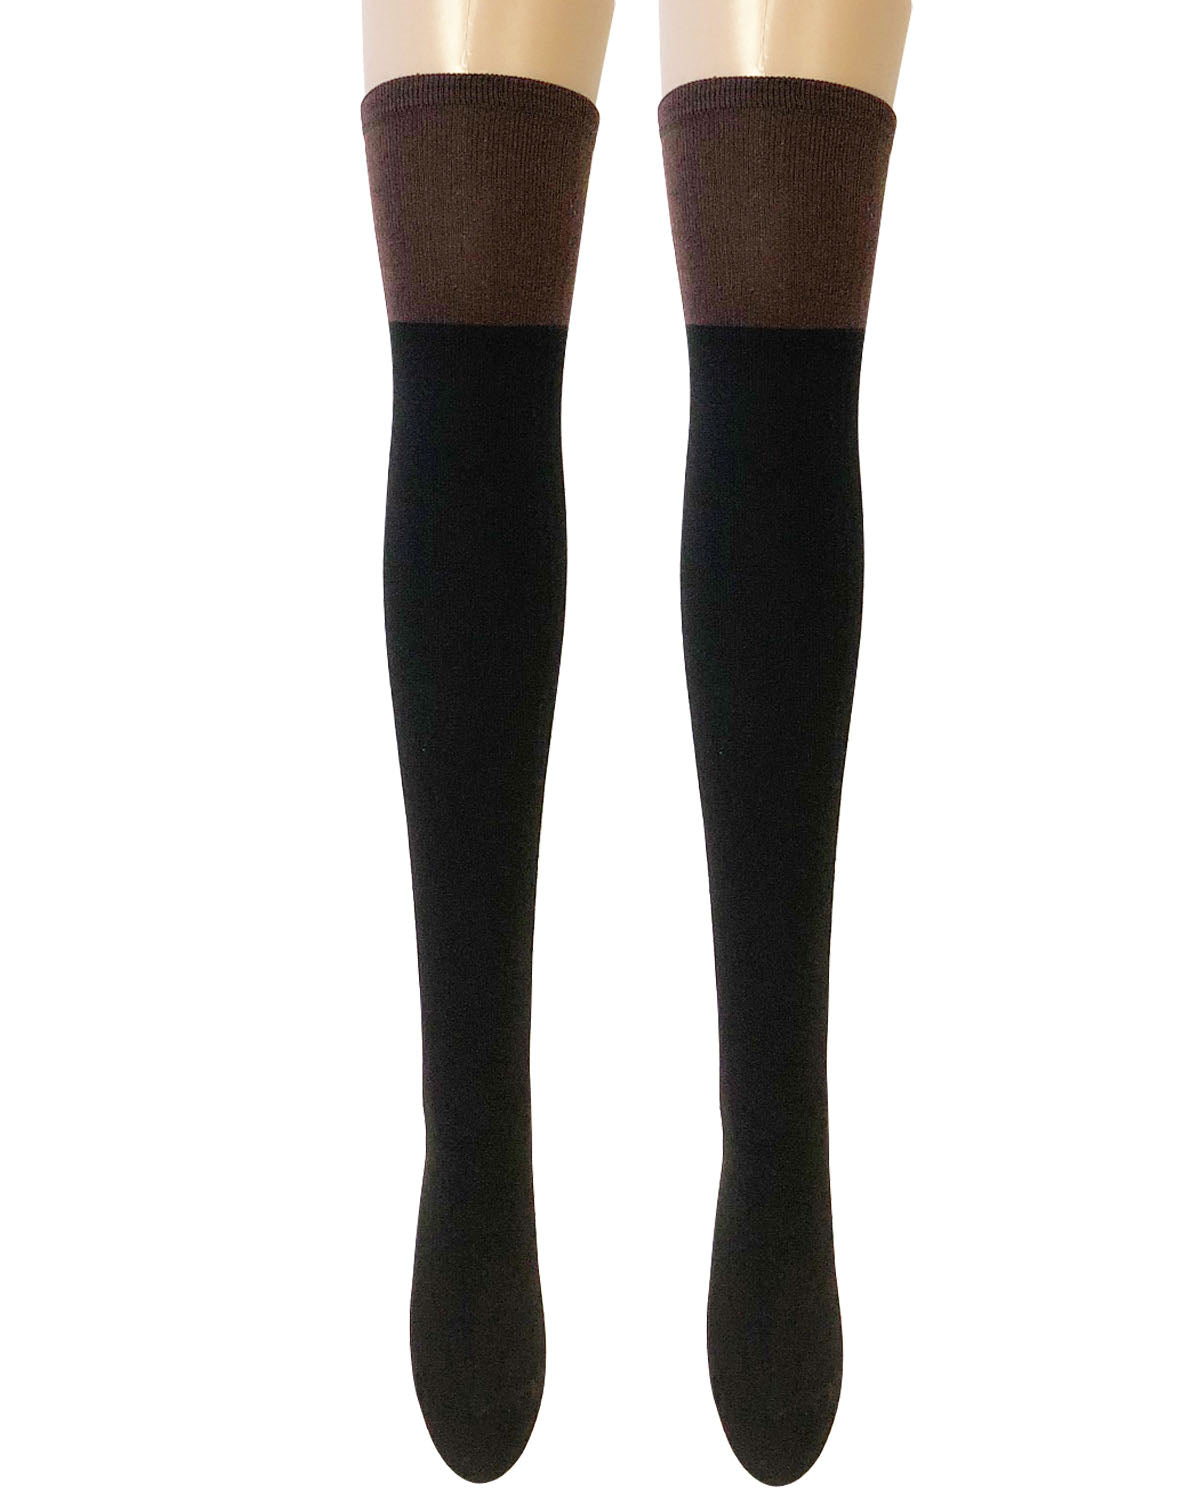 WrapablesÂ® Women's Two-Tone Knee High Boot Socks